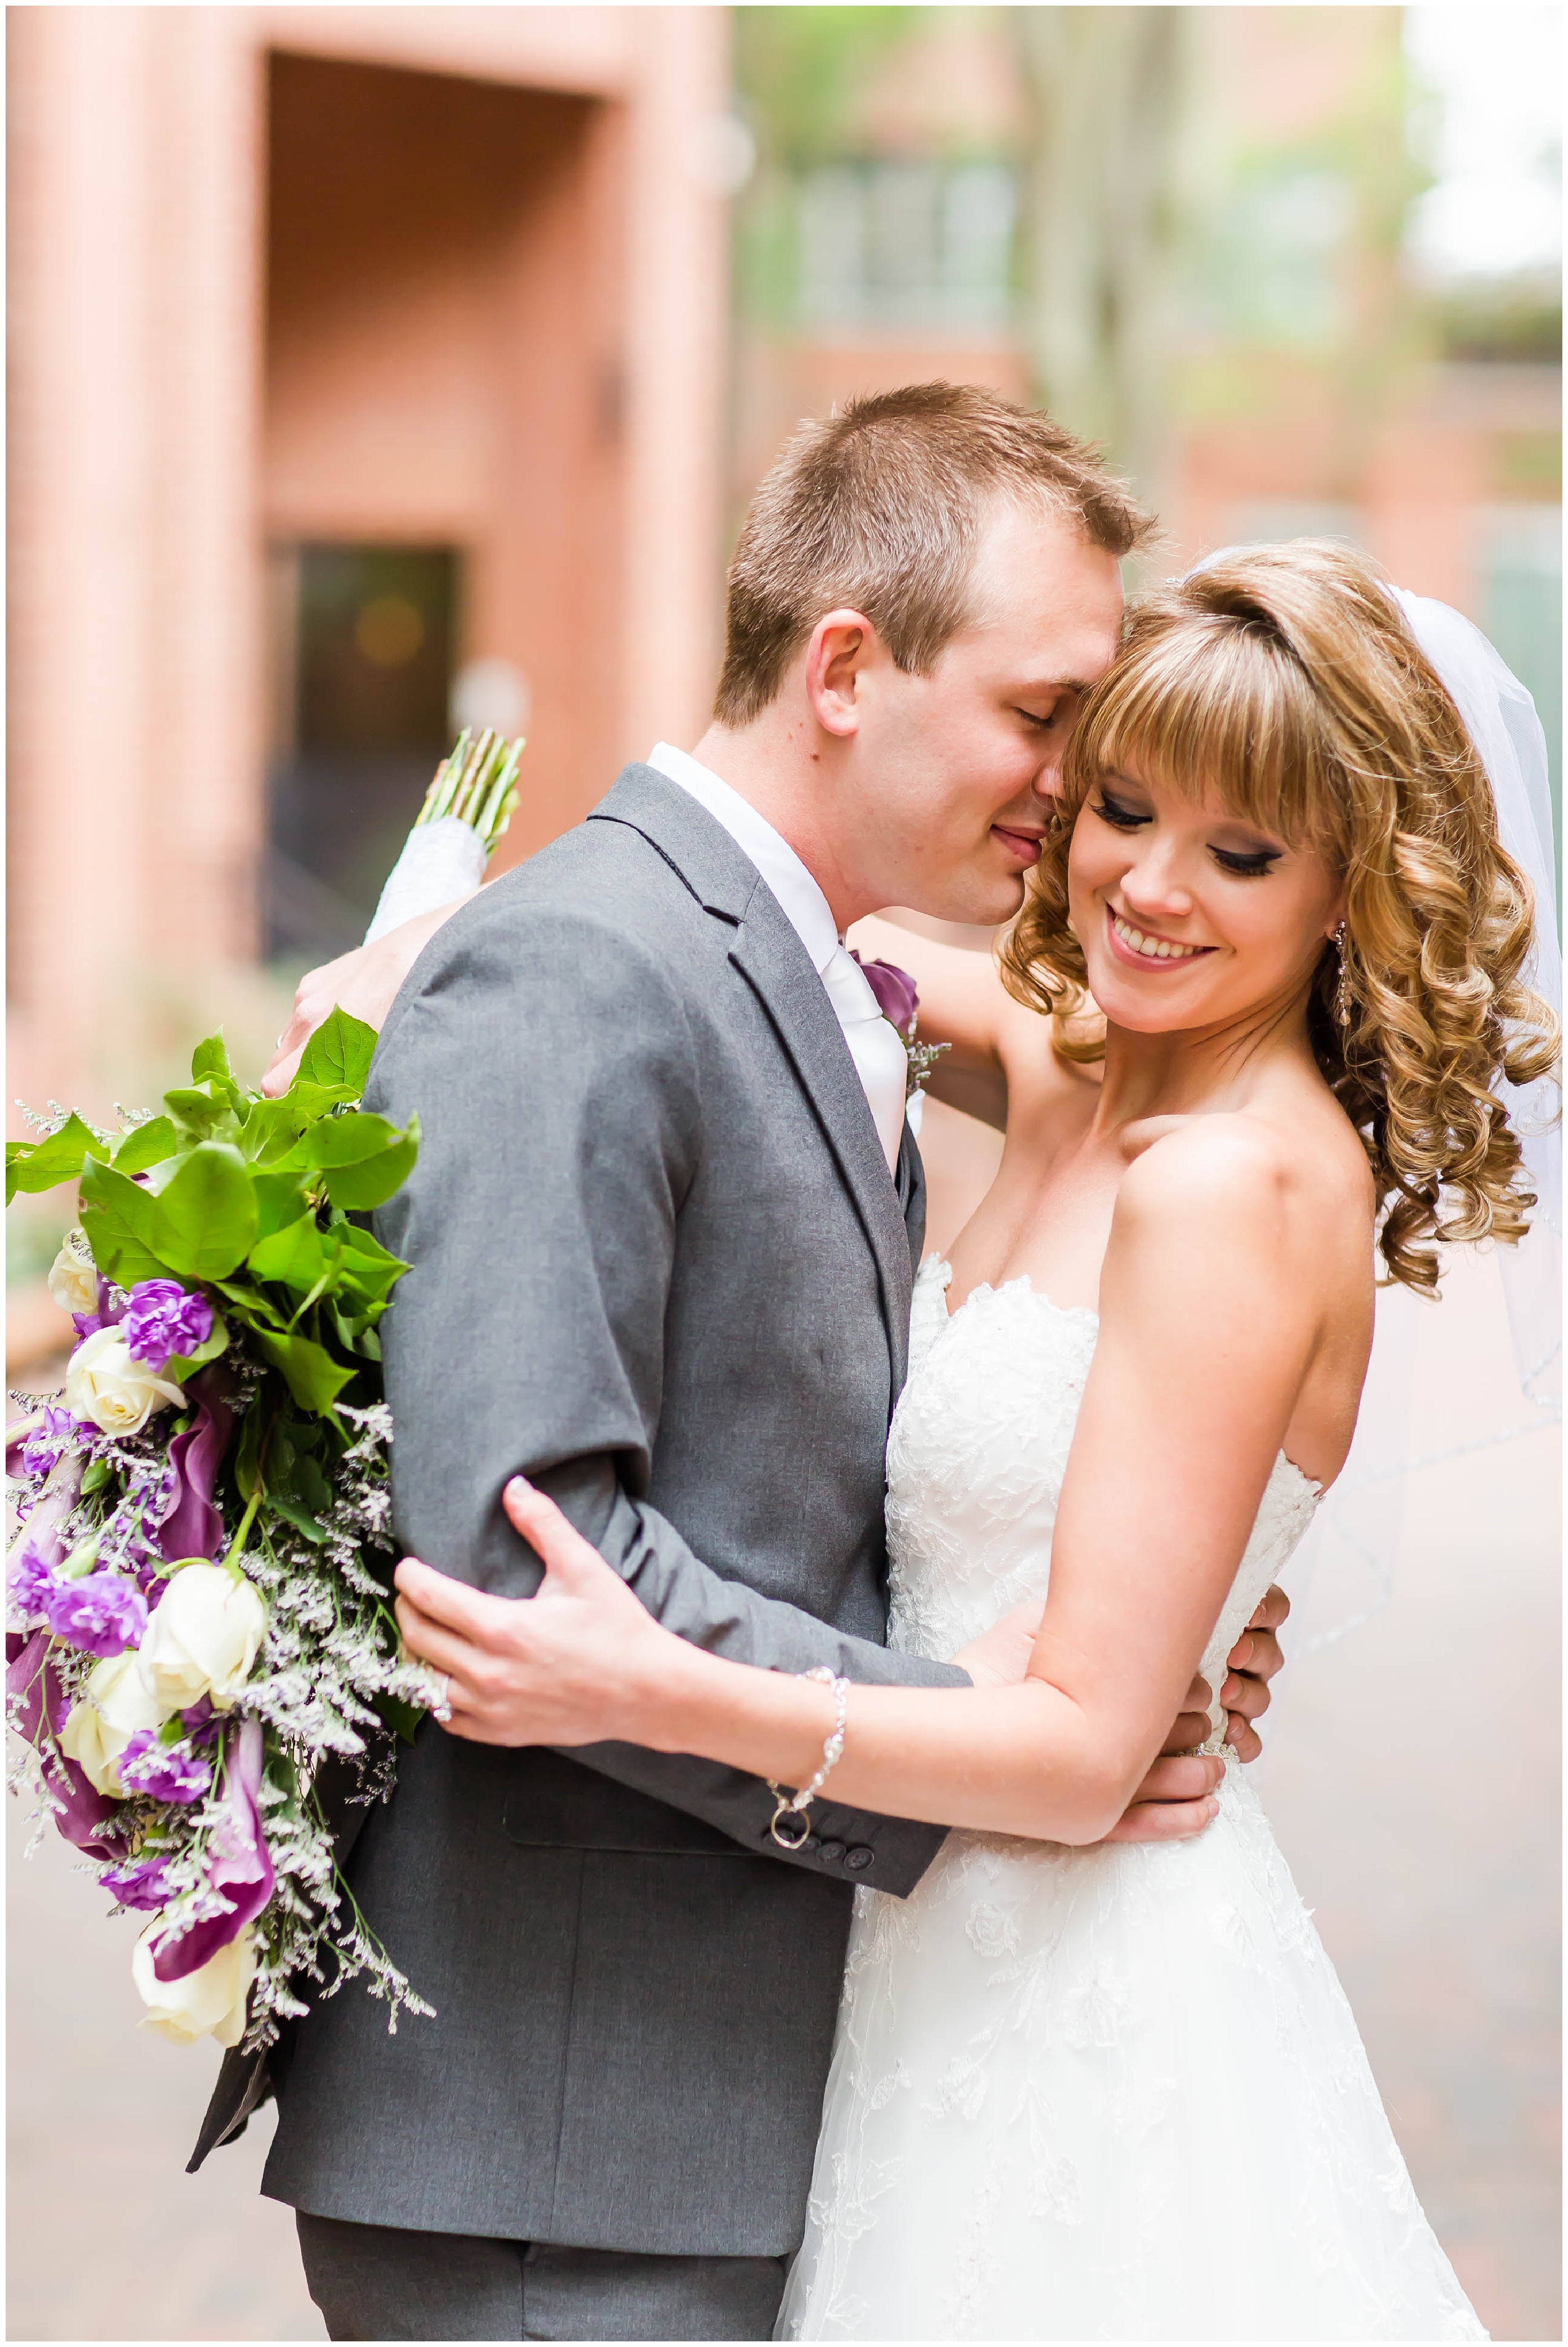 Cleveland Ohio Wedding Photographer,Philly Wedding,loren jackson photography,photographer akron ohio,purple and grey wedding,wedding in May,